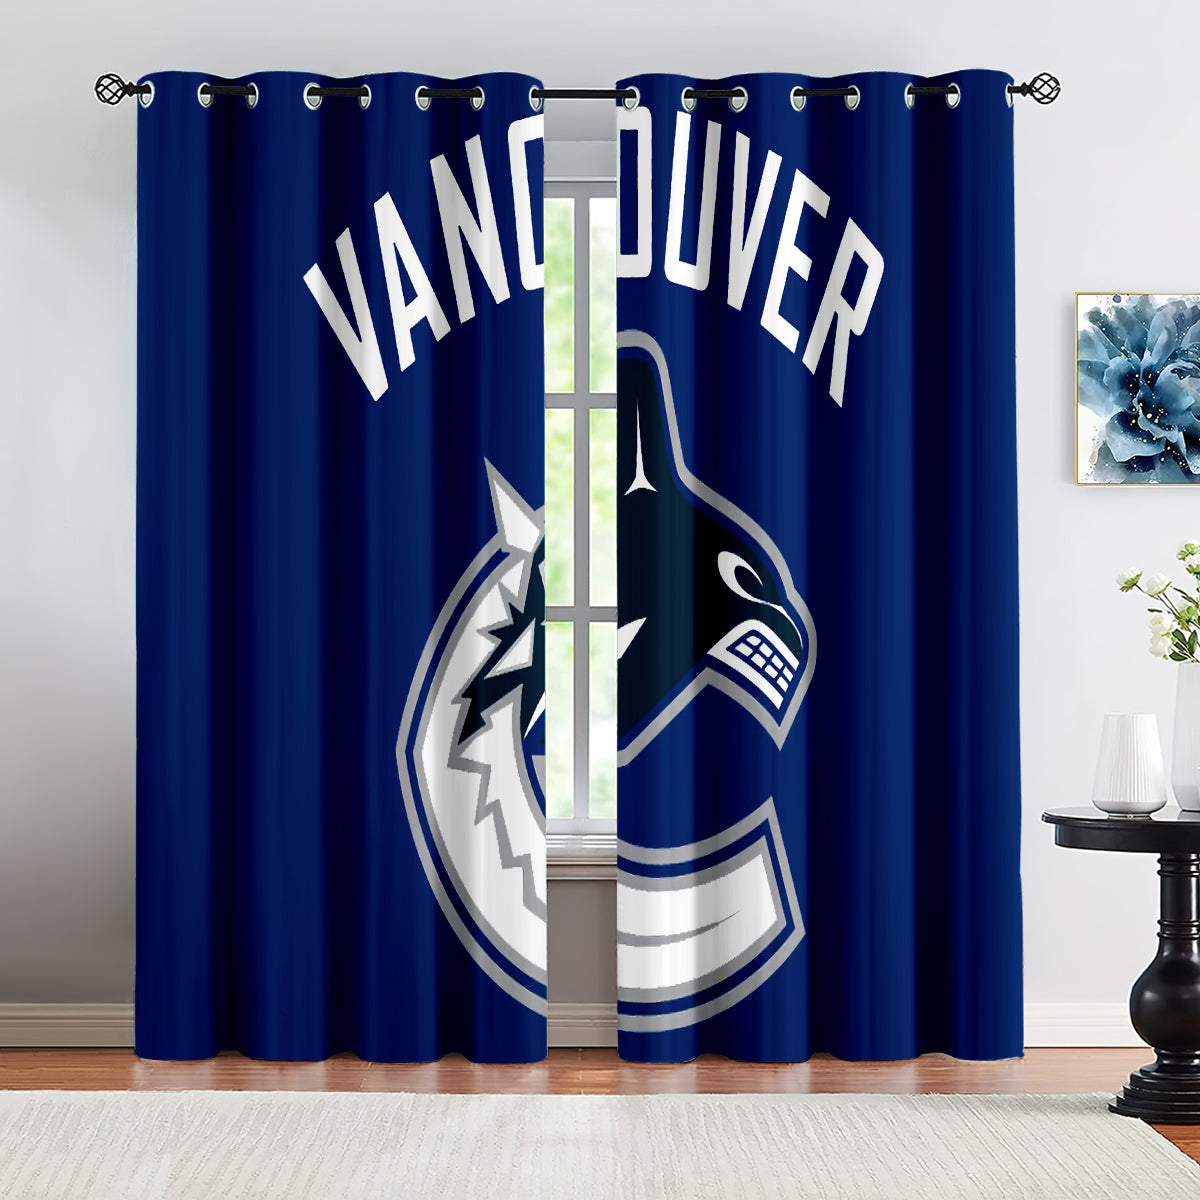 Vancouver Canucks Hockey League Blackout Curtains Drapes For Window Treatment Set